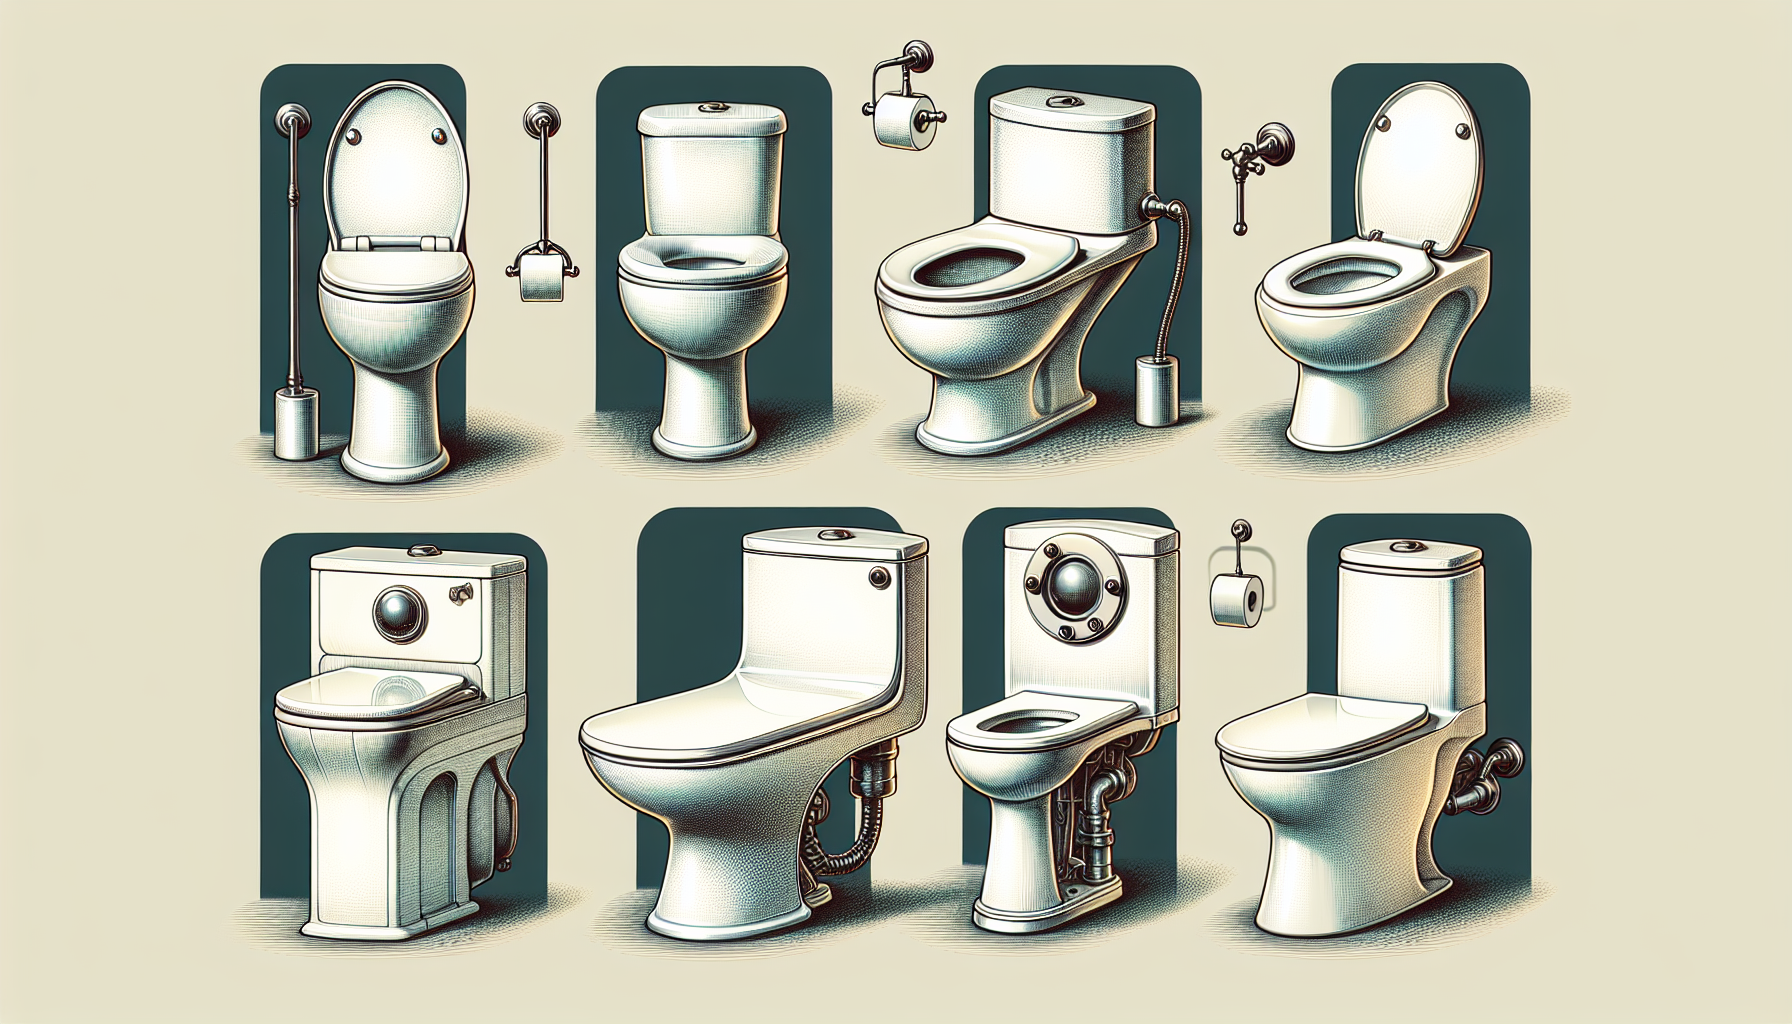 Platzsparende Toilettenmodelle